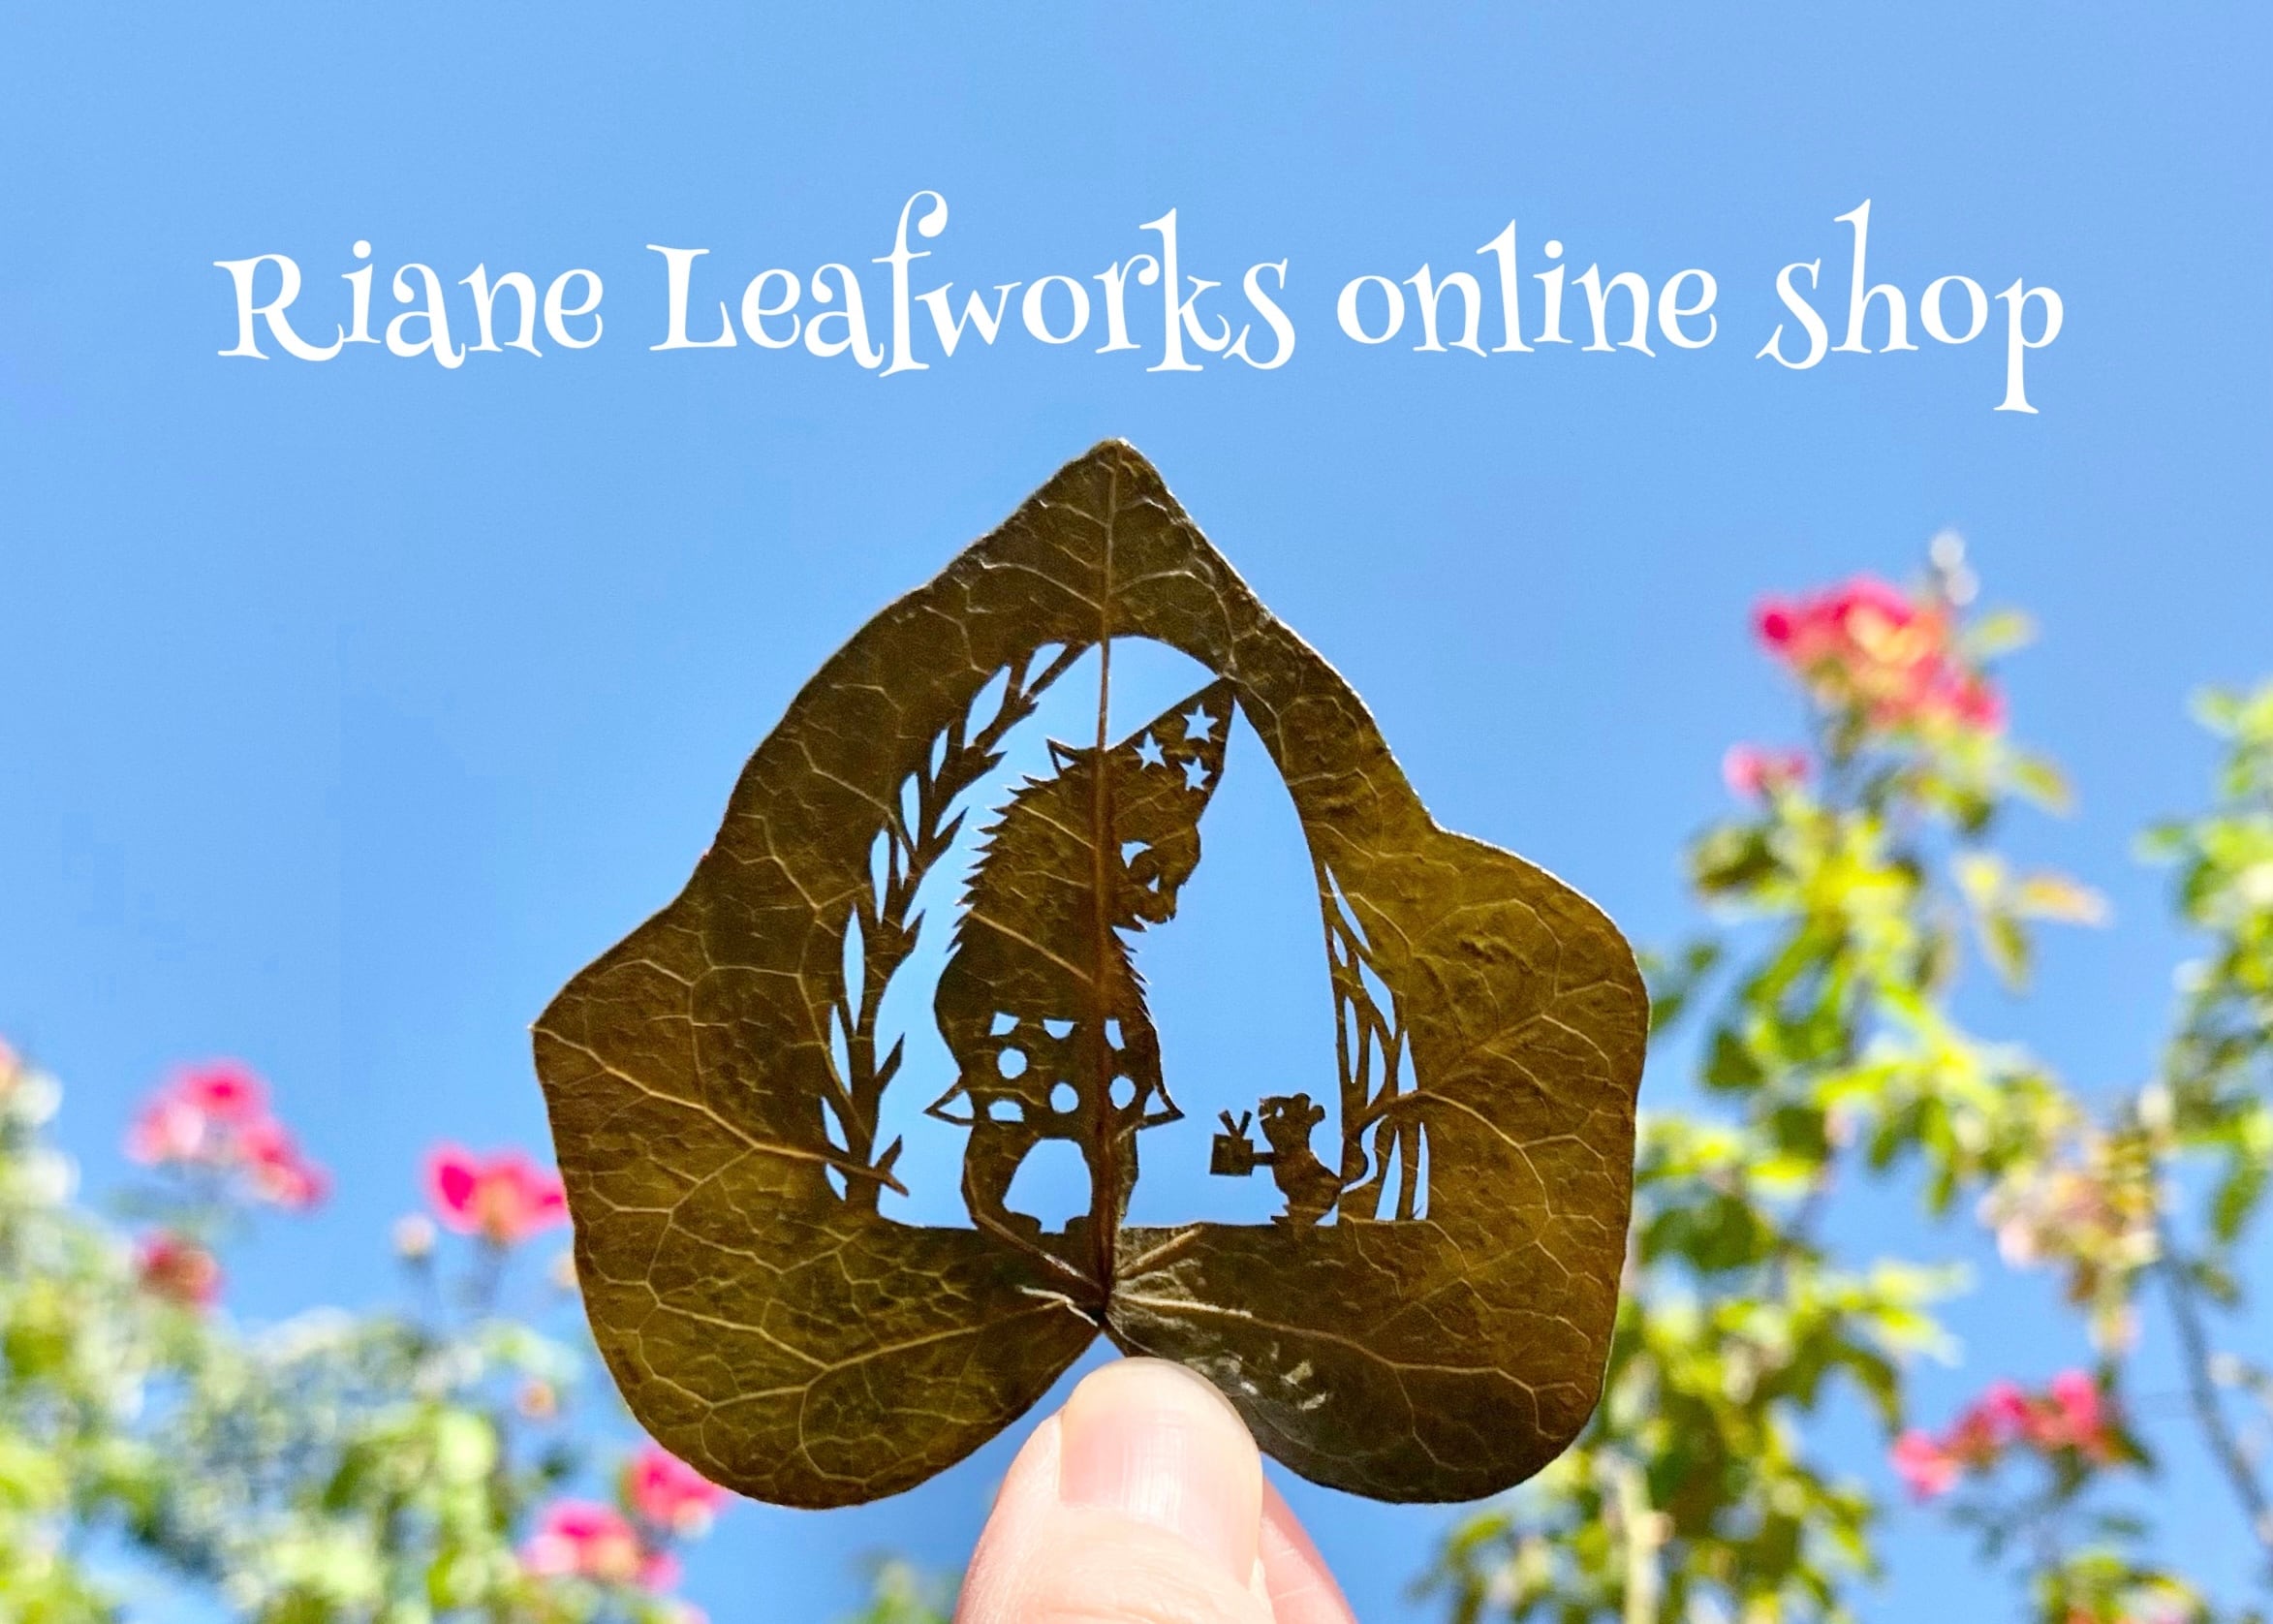 Riane Leafworks online shop